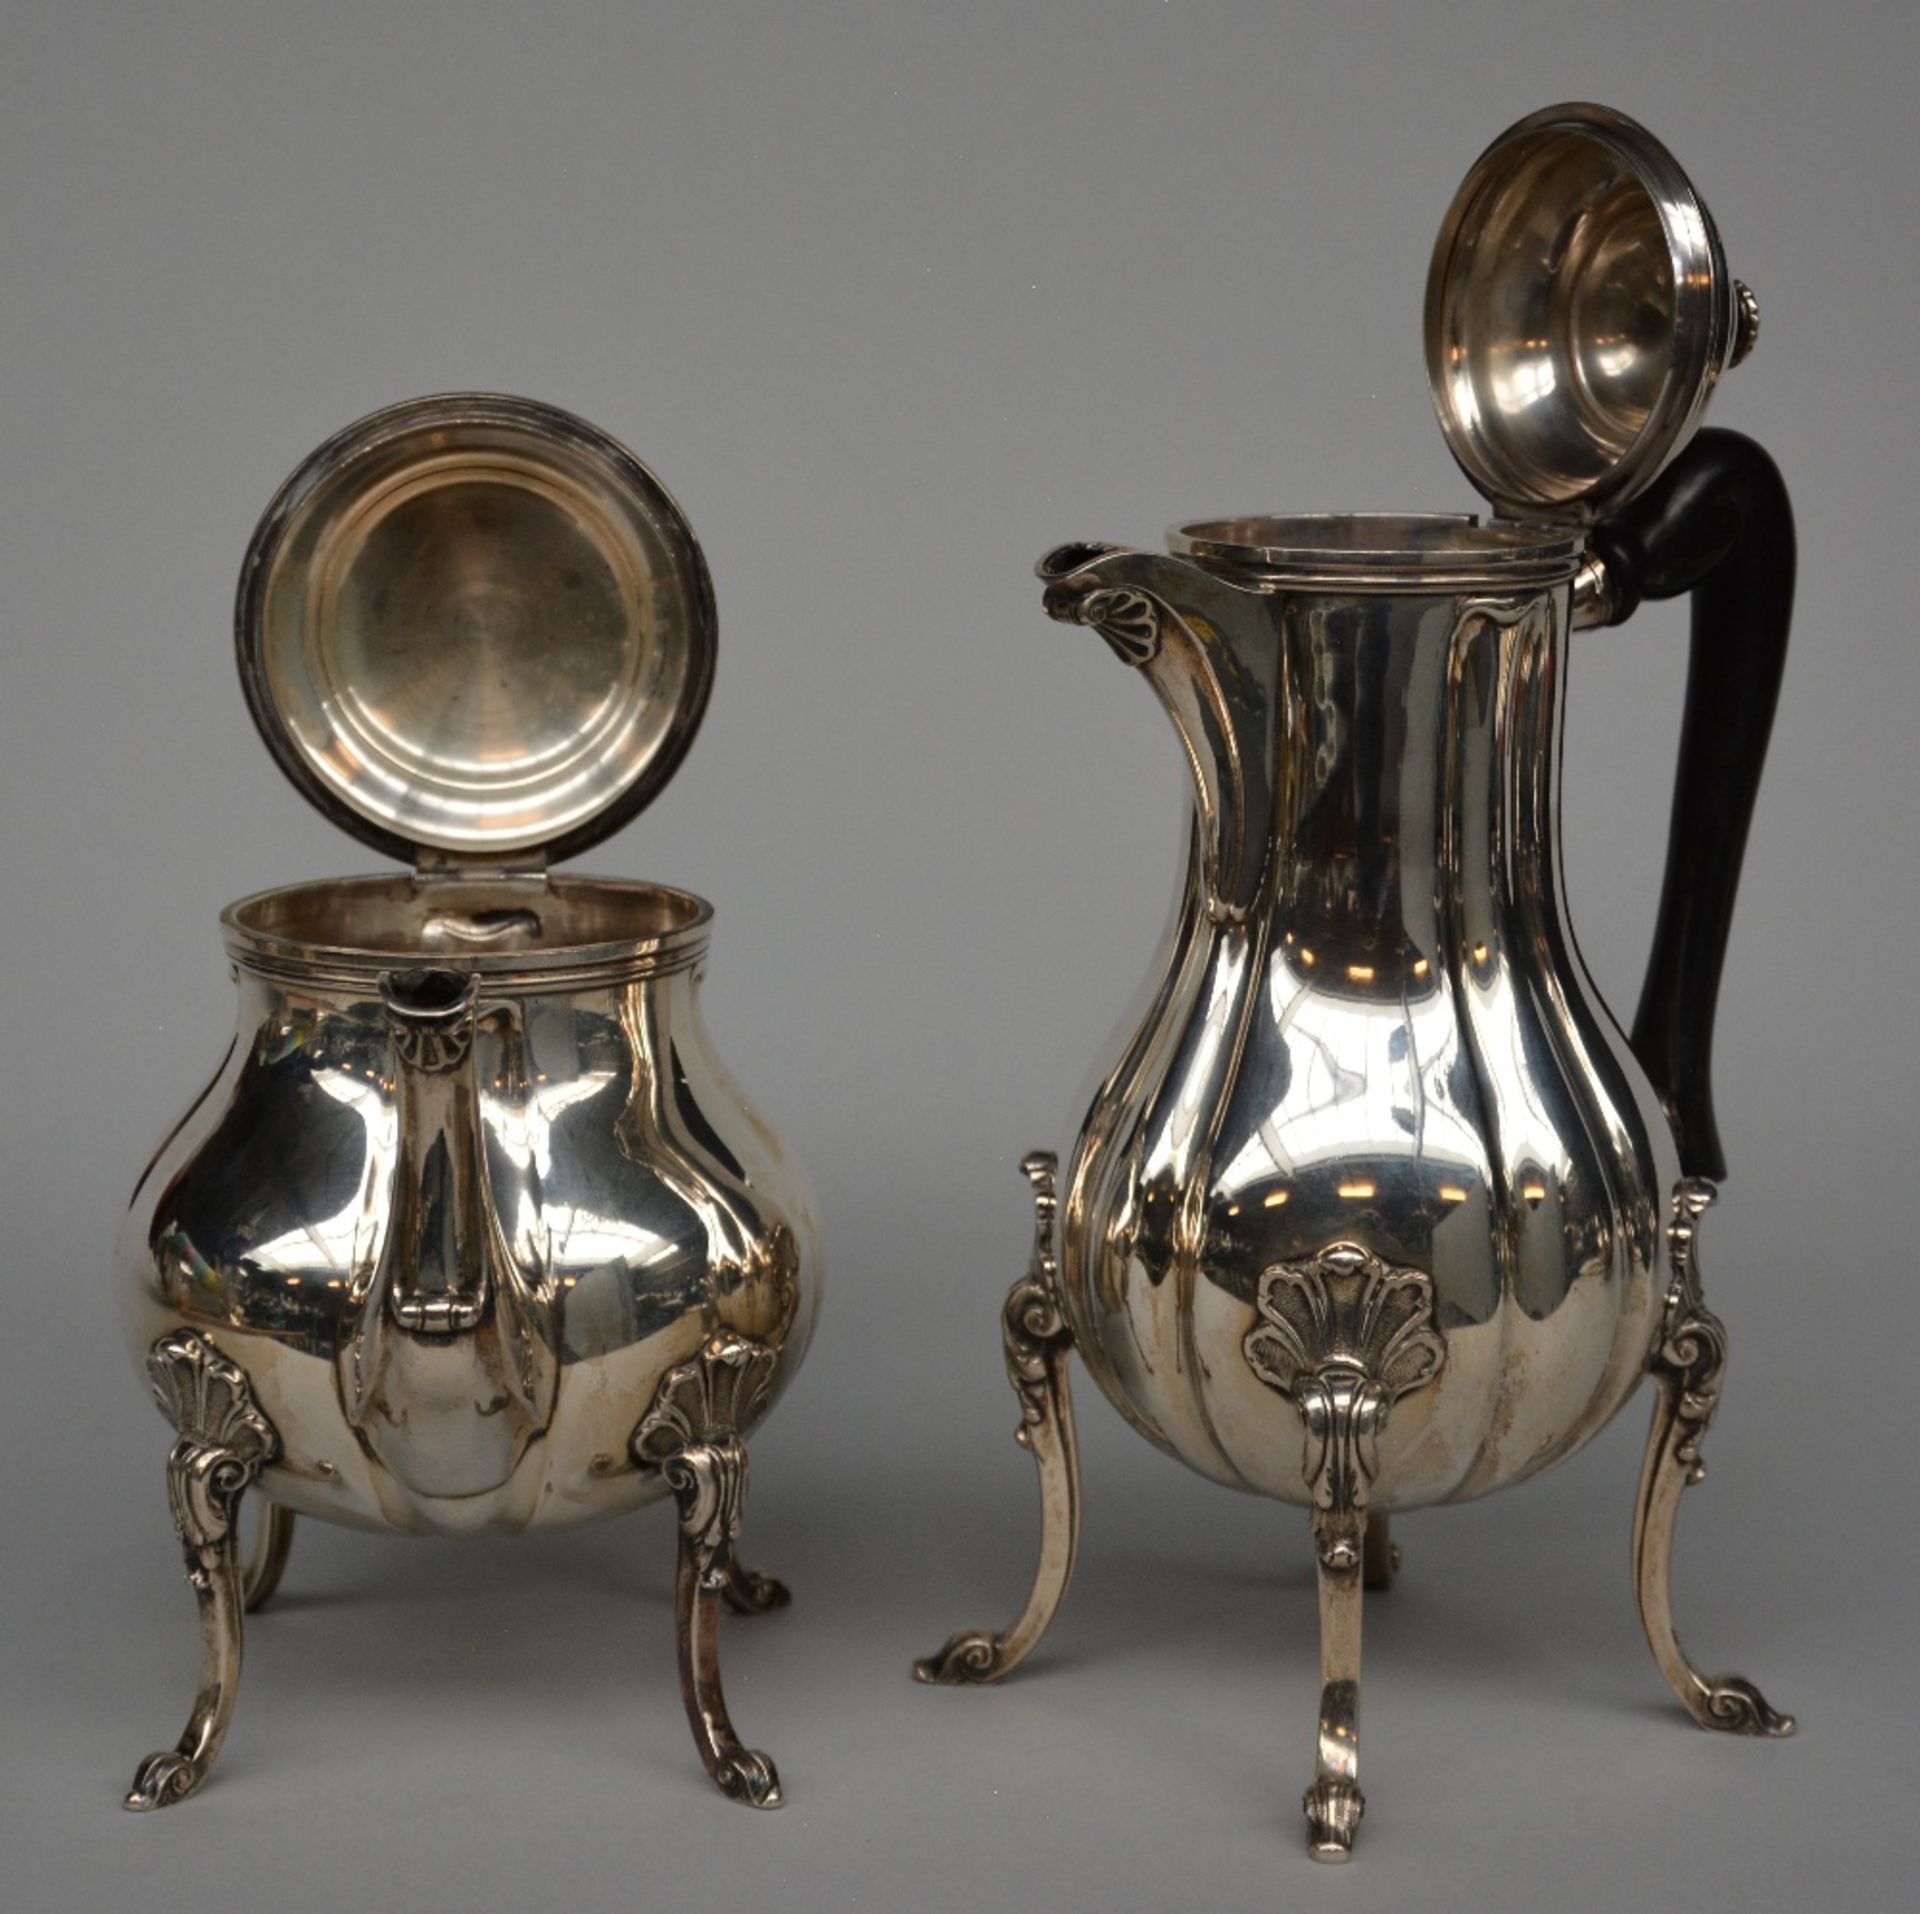 A four-piece silver coffee and tea set, Belgium 1868 - 1942, 800/000, makers' mark, Delheid, H - Bild 4 aus 4